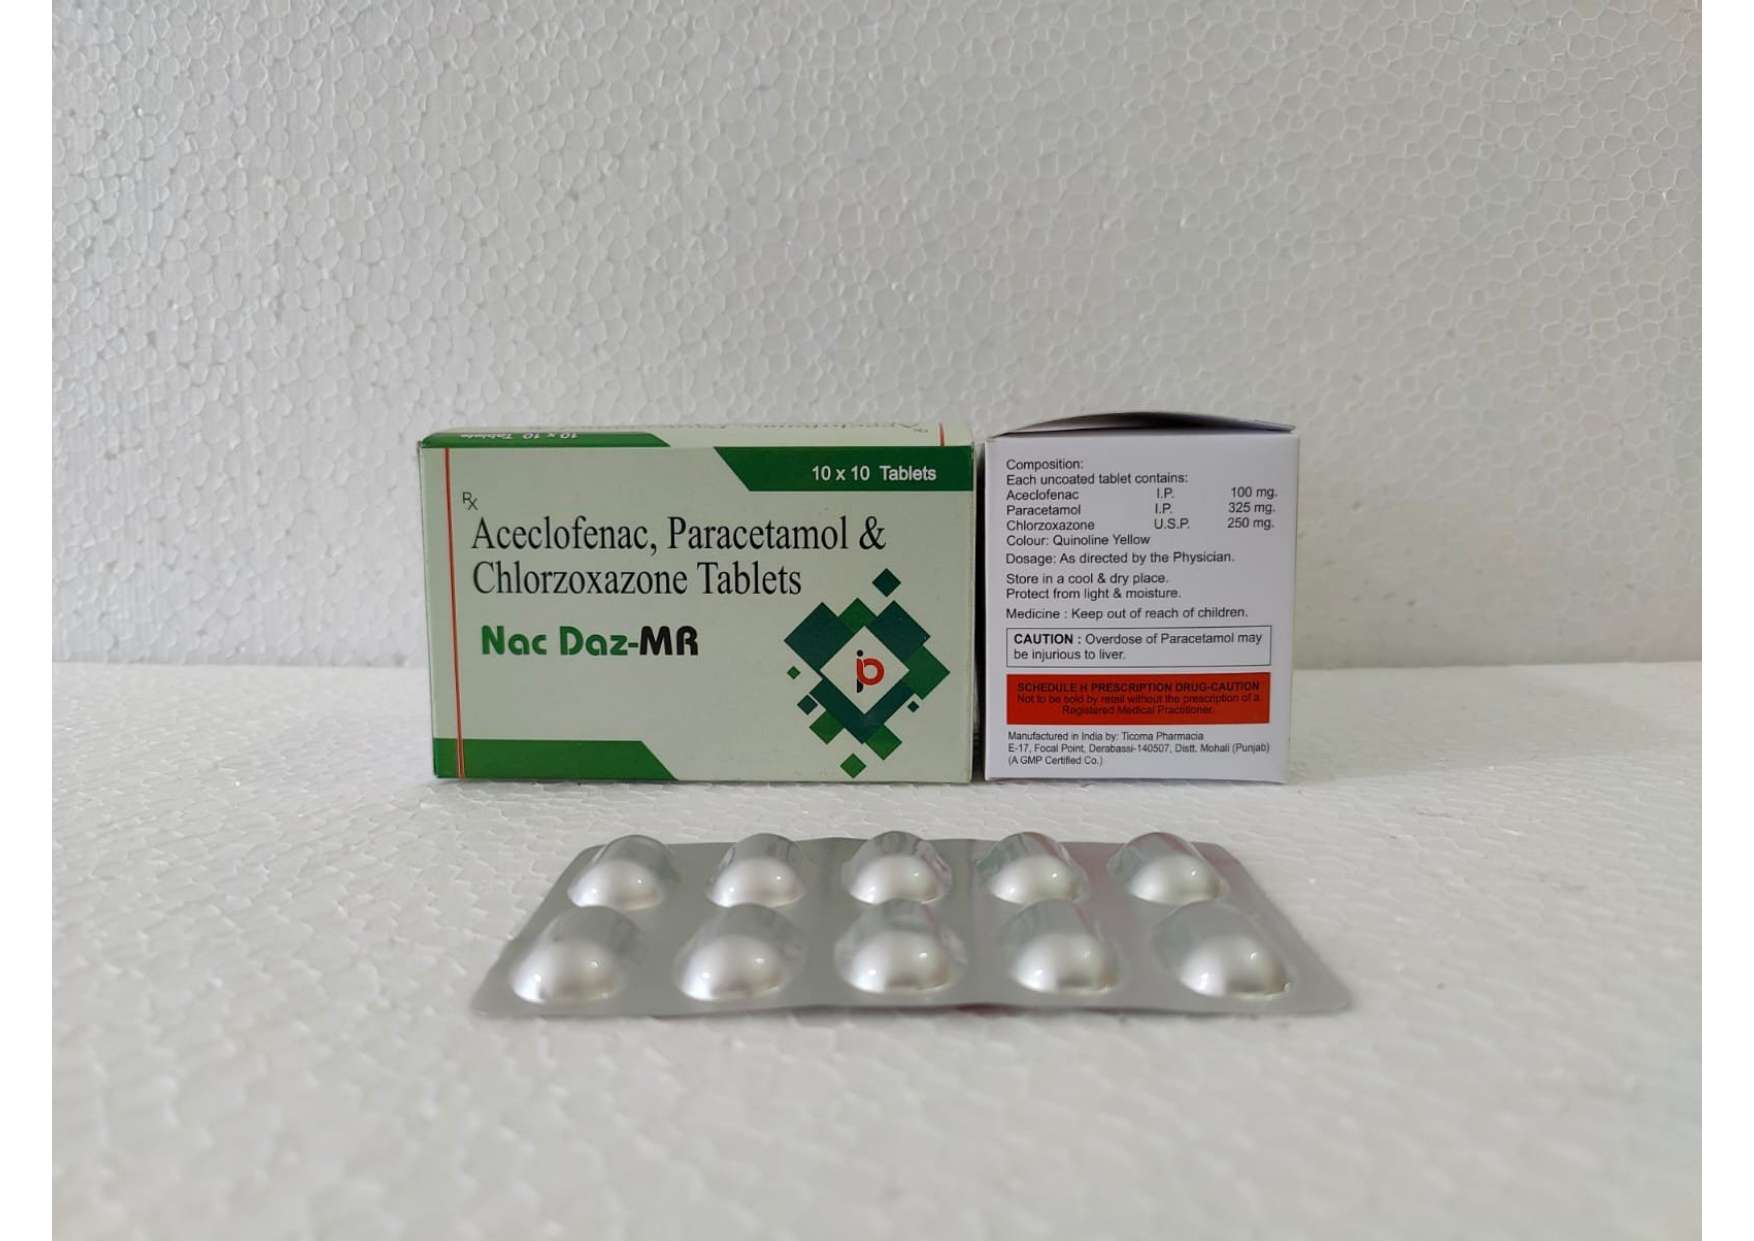 aceclofenac 100mg+paracetamol
325
mg+chlorzoxazone
250 mg